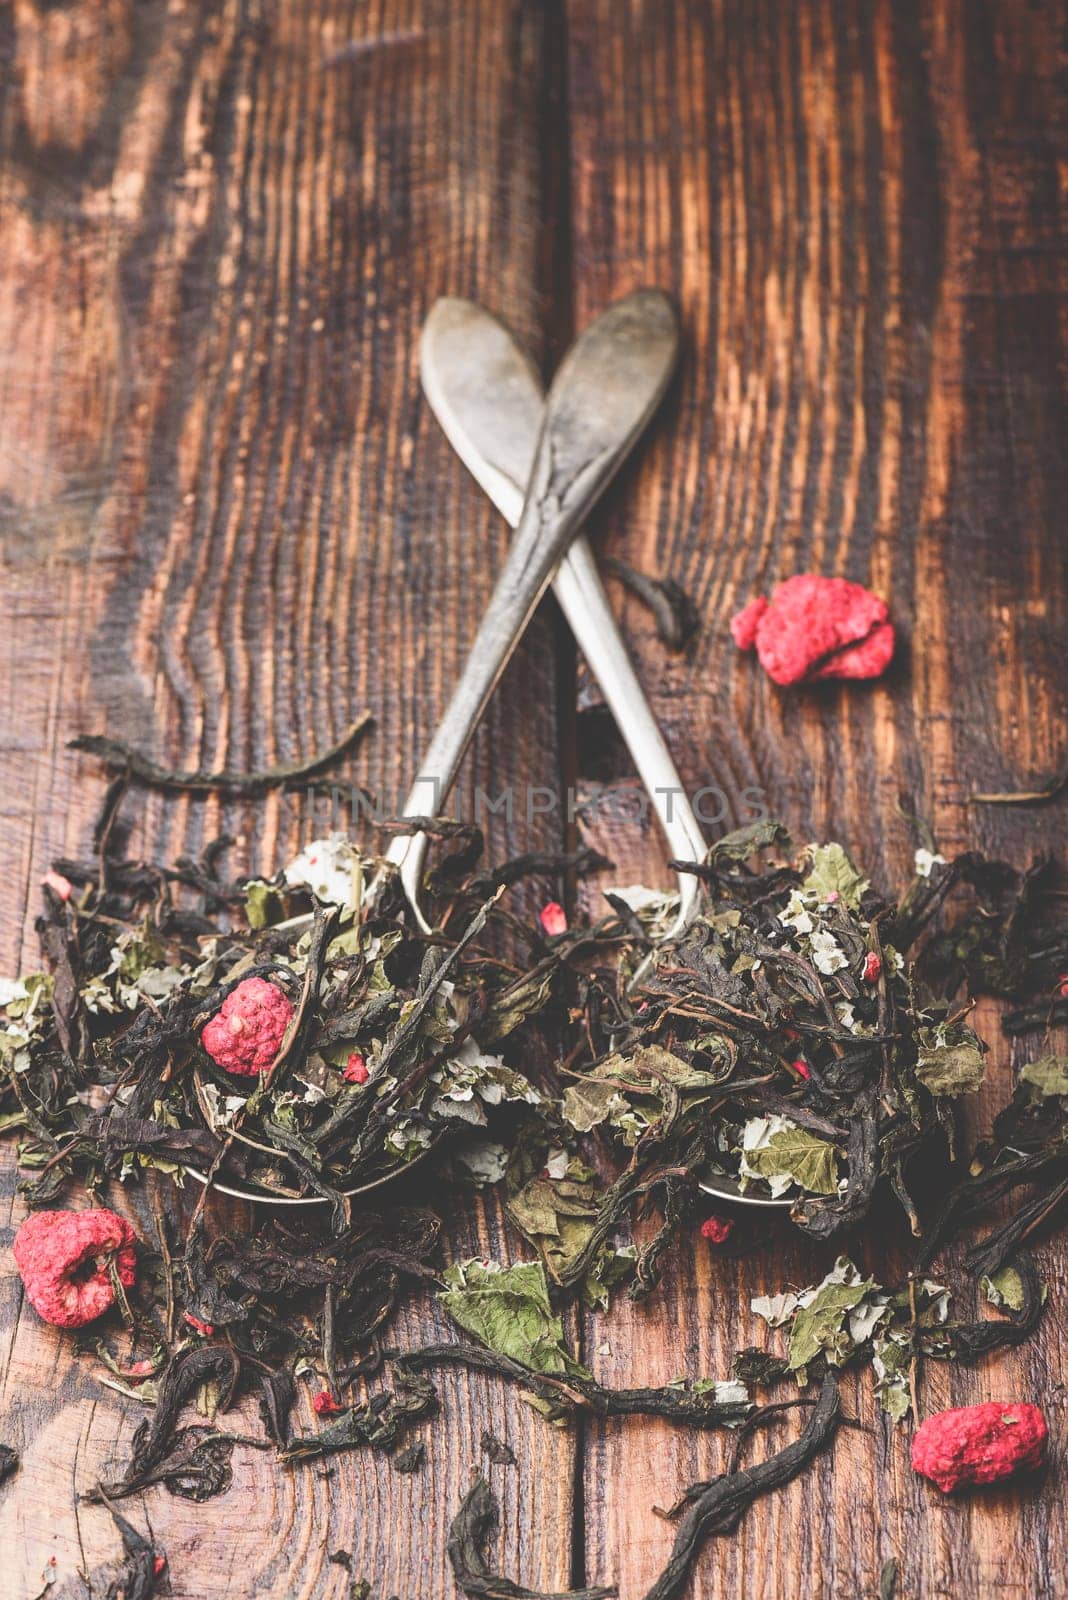 Two spoonfuls of raspberry herbal tea by Seva_blsv